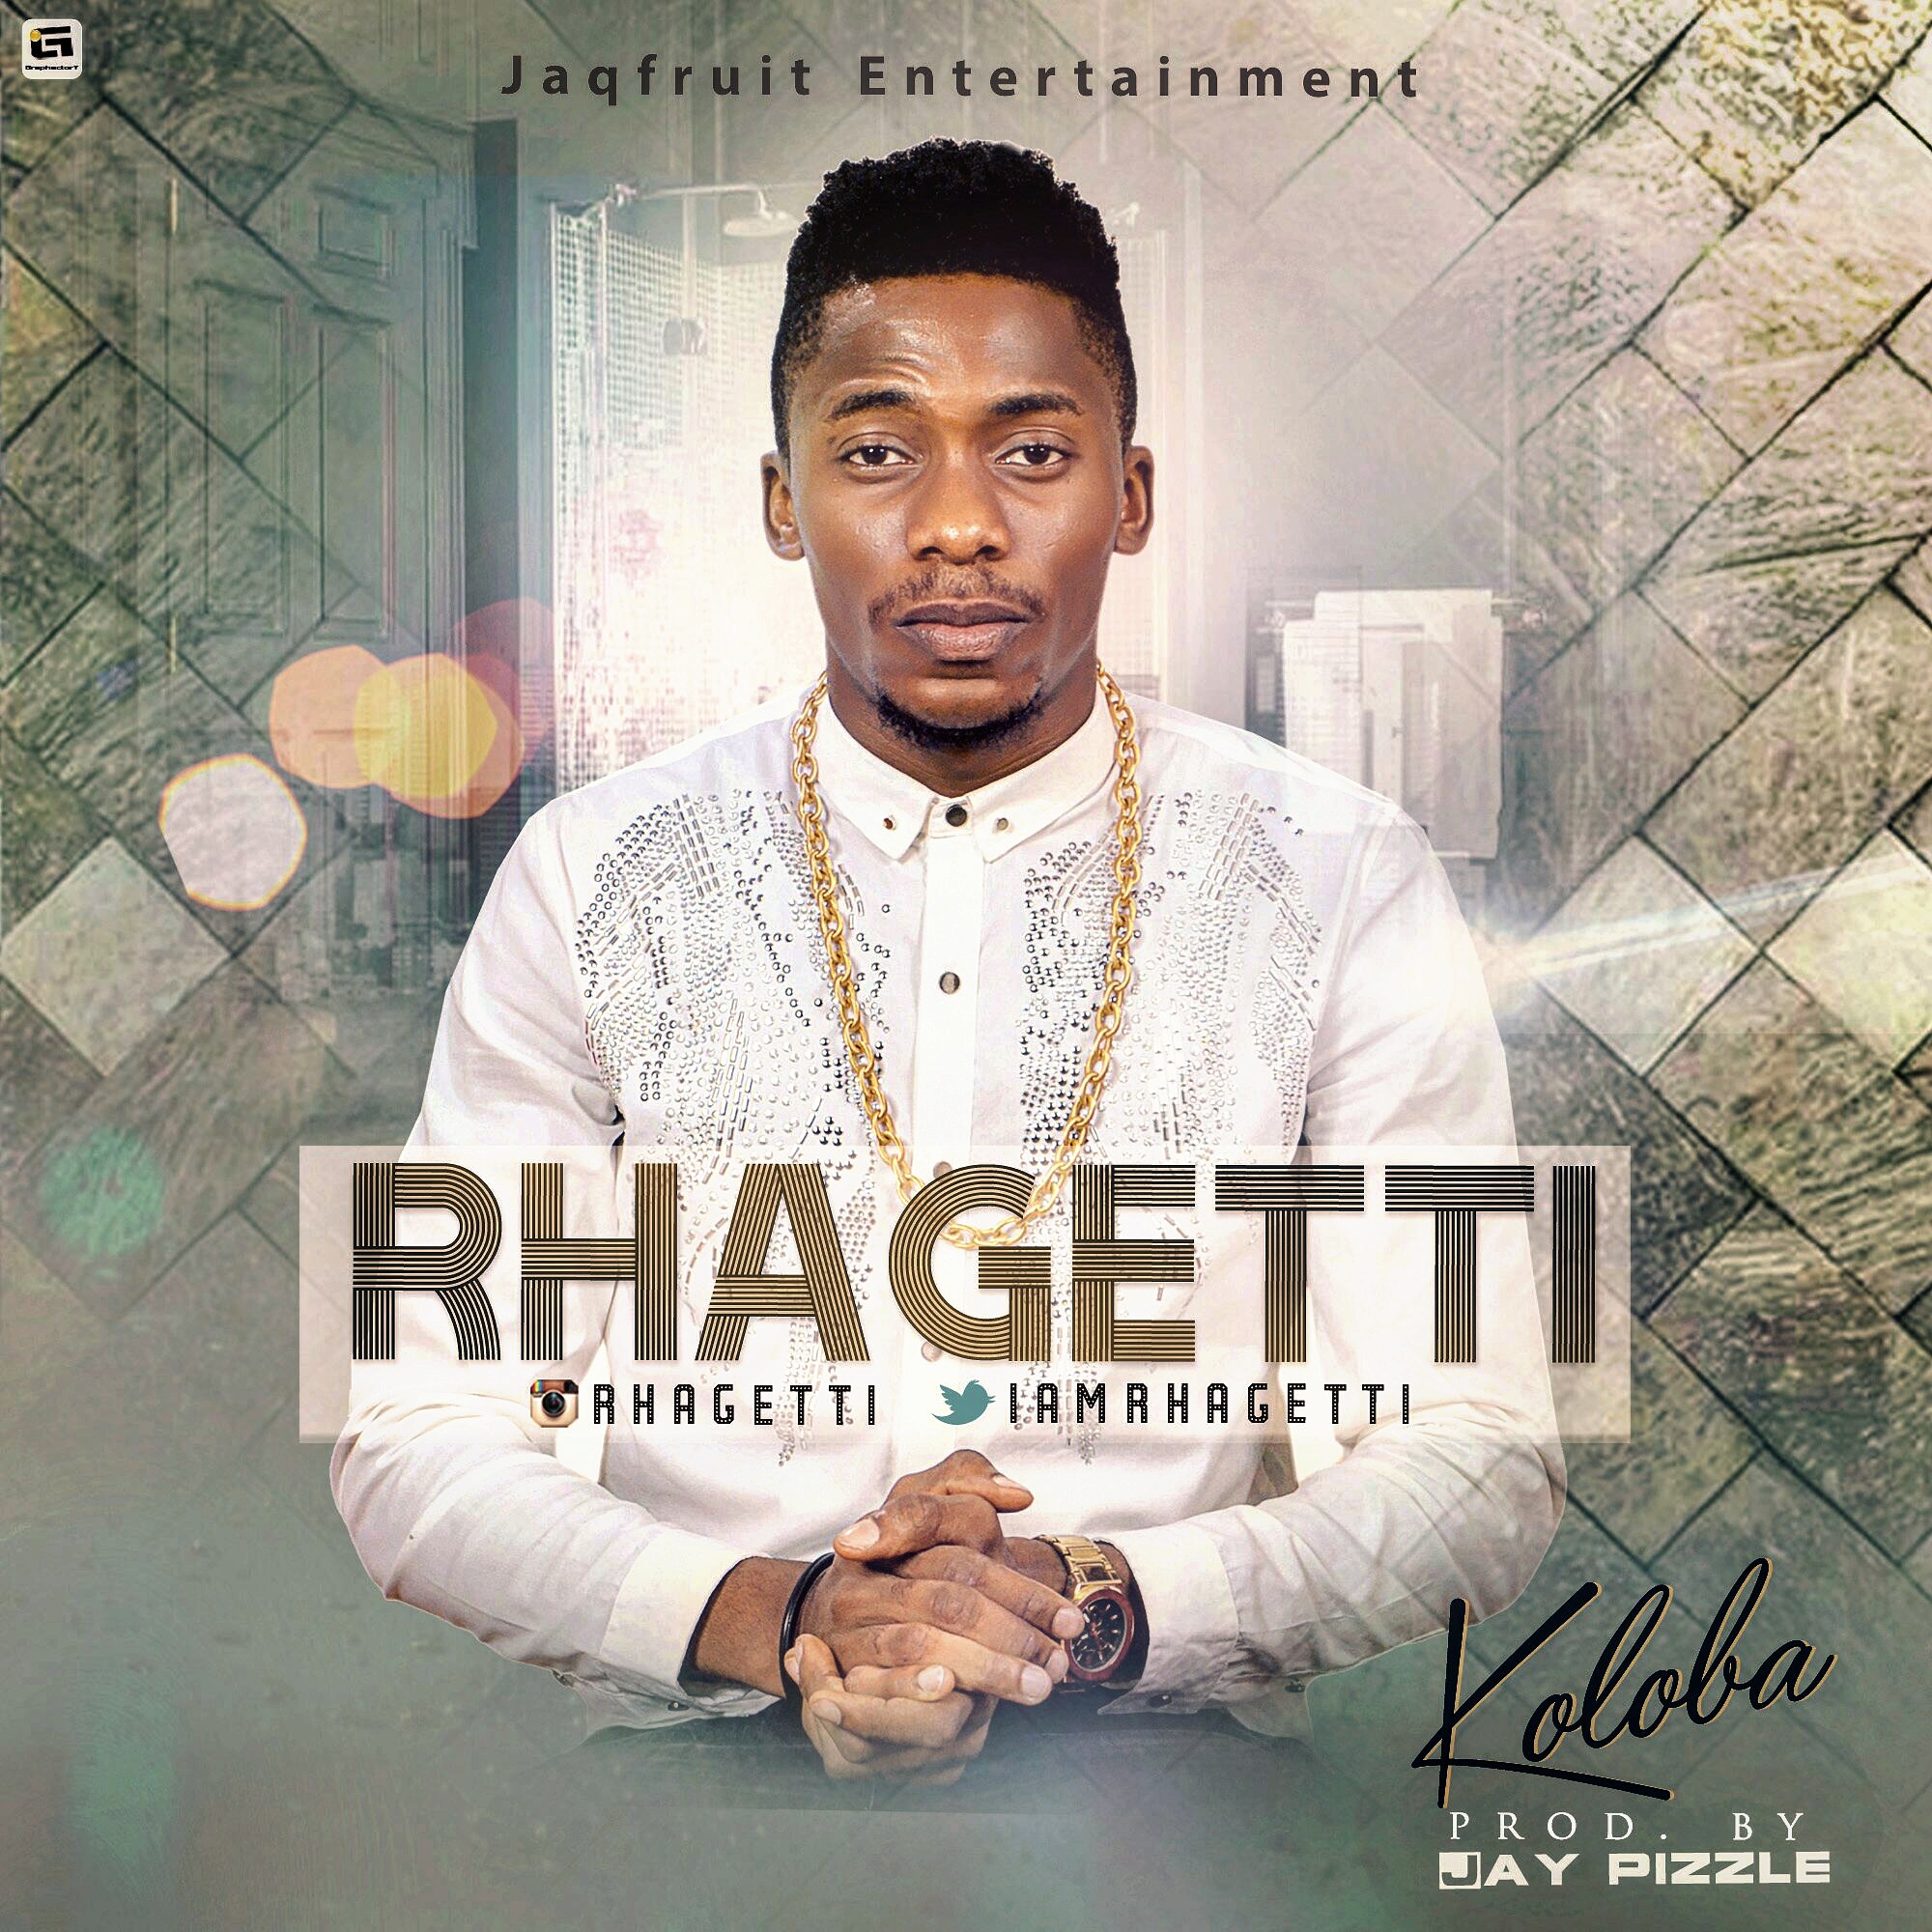 Rhagetti – Koloba (Prod. By Jay Pizzle)